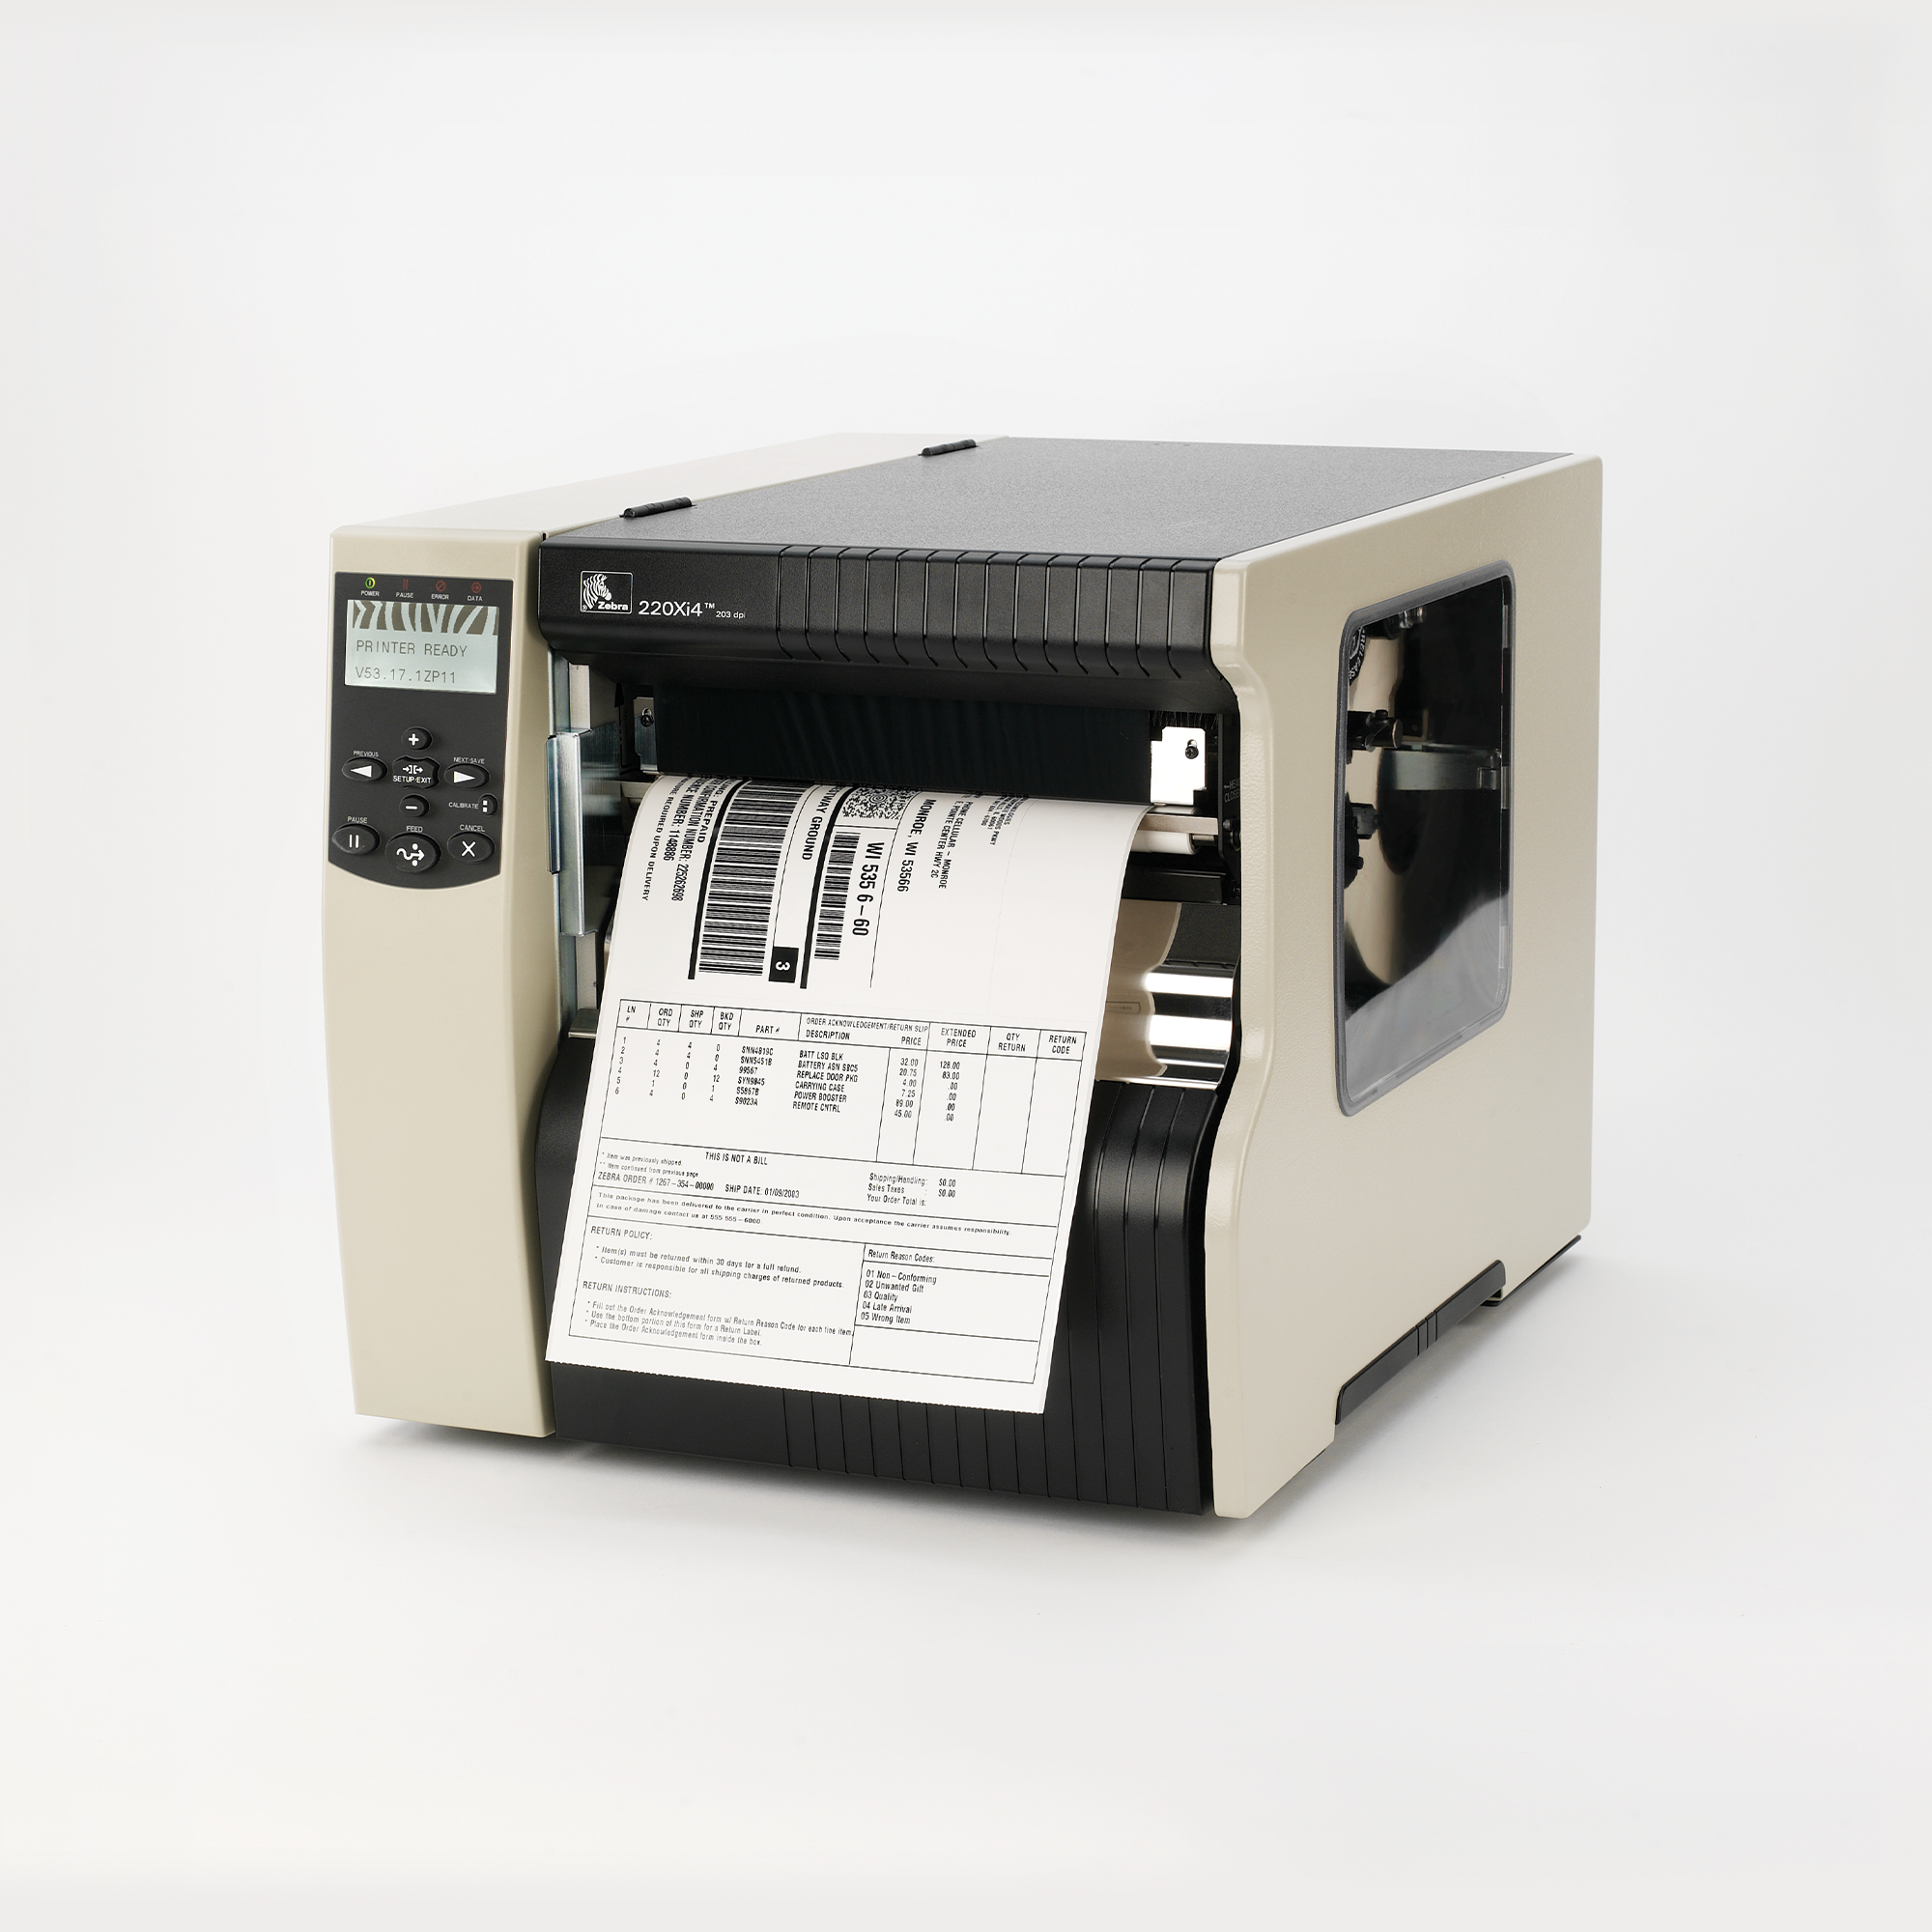 Zebra 220Xi4 Thermal Transfer Printer - 300dpi, US Cord, Serial, Parallel, USB, Int 10/100, Rewind with Peel - MPN: 223-801-00200